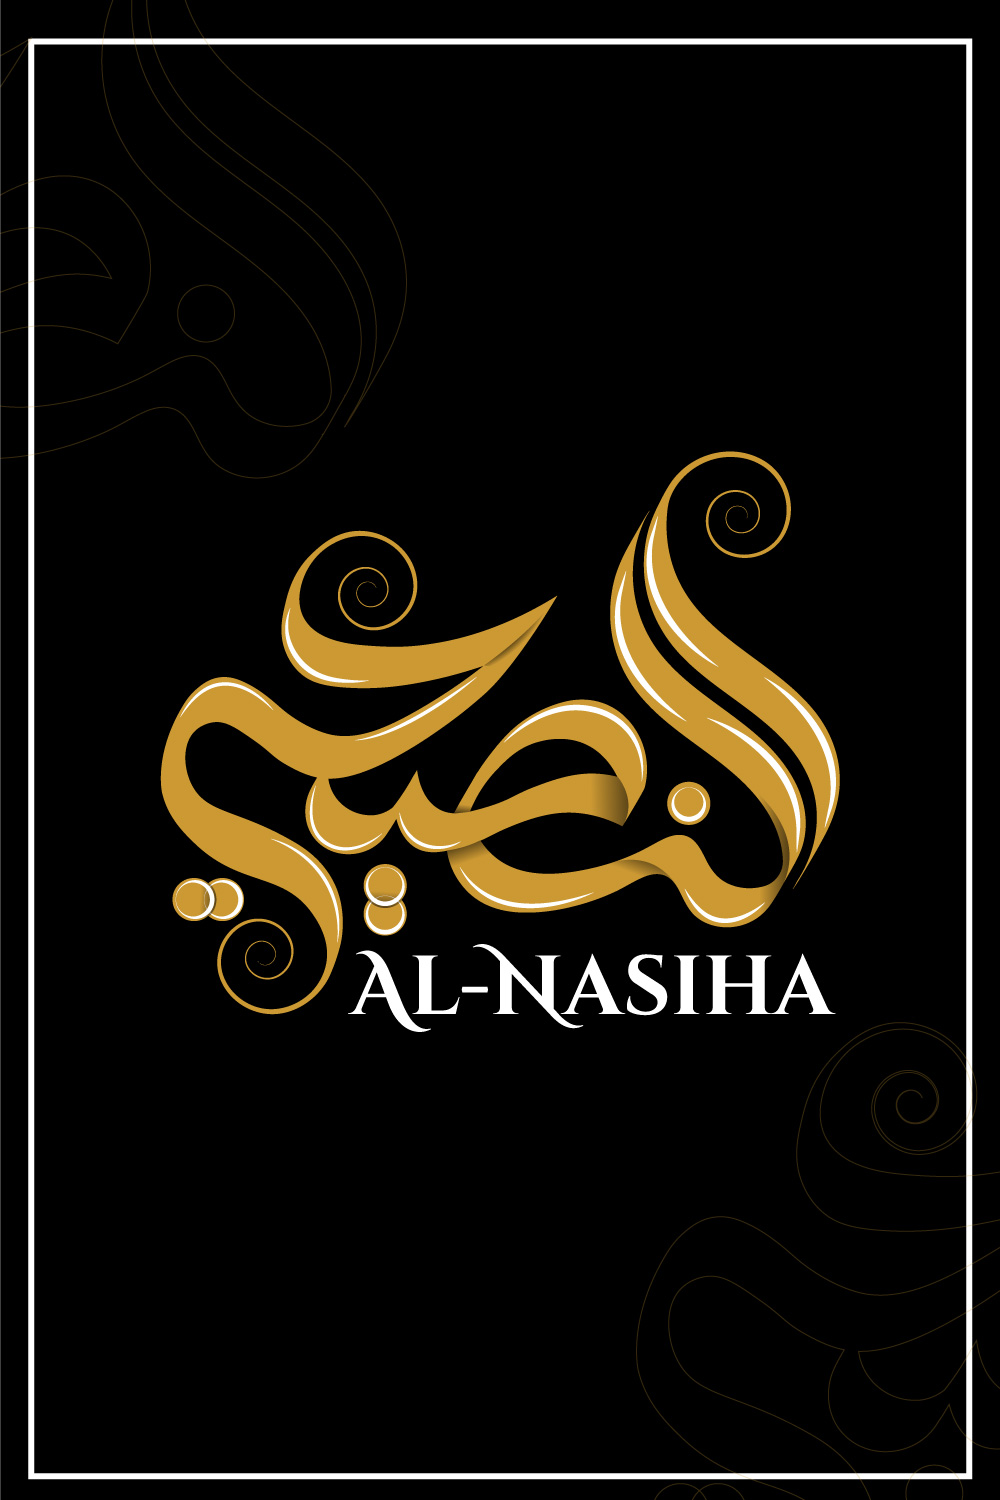 Arabic Logo Al-Nasiha pinterest preview image.